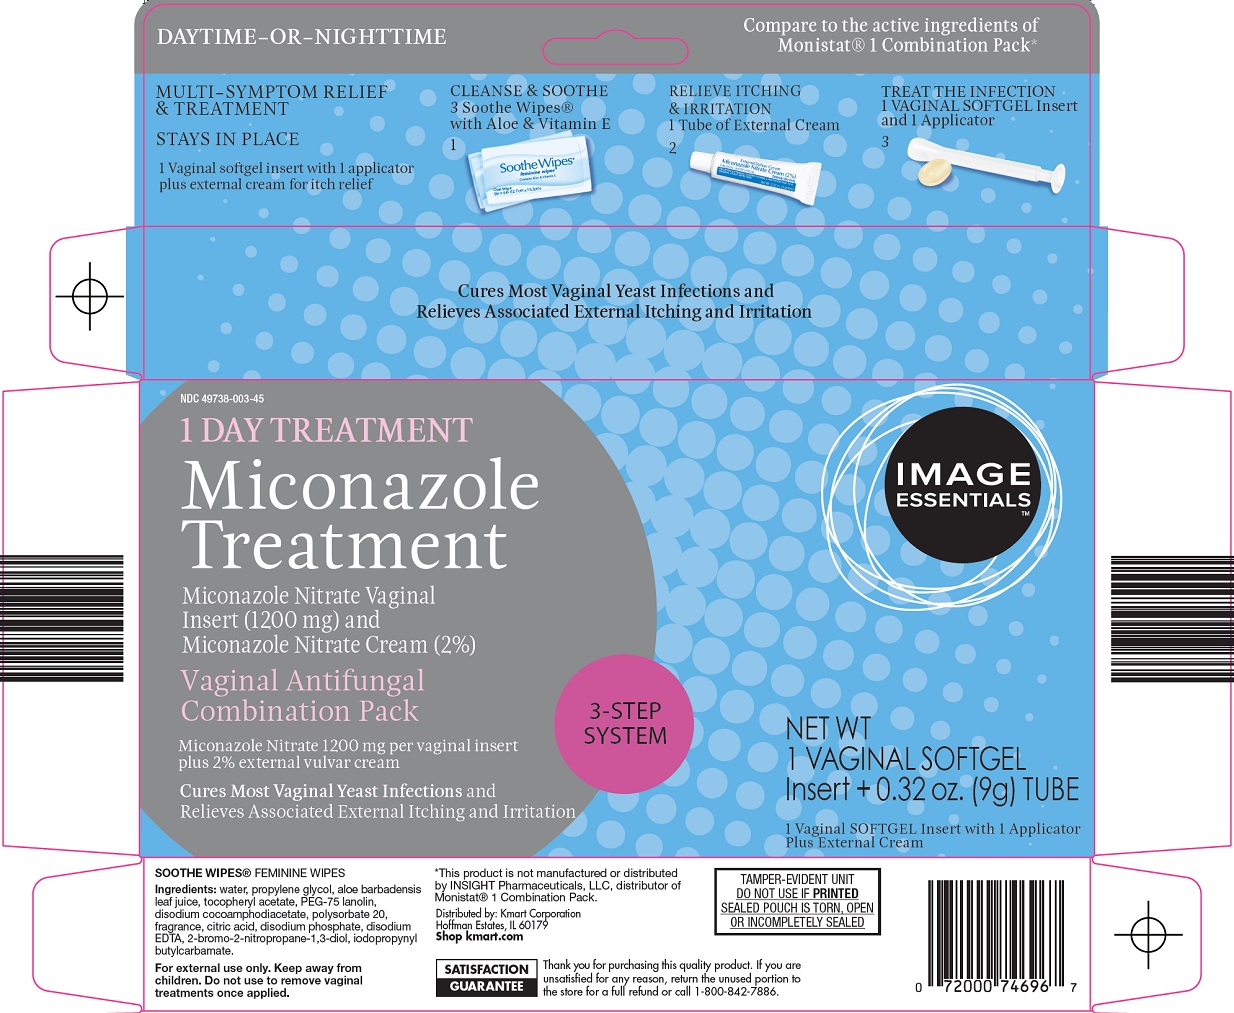 Image Essentials Miconazole Treatment Image 1